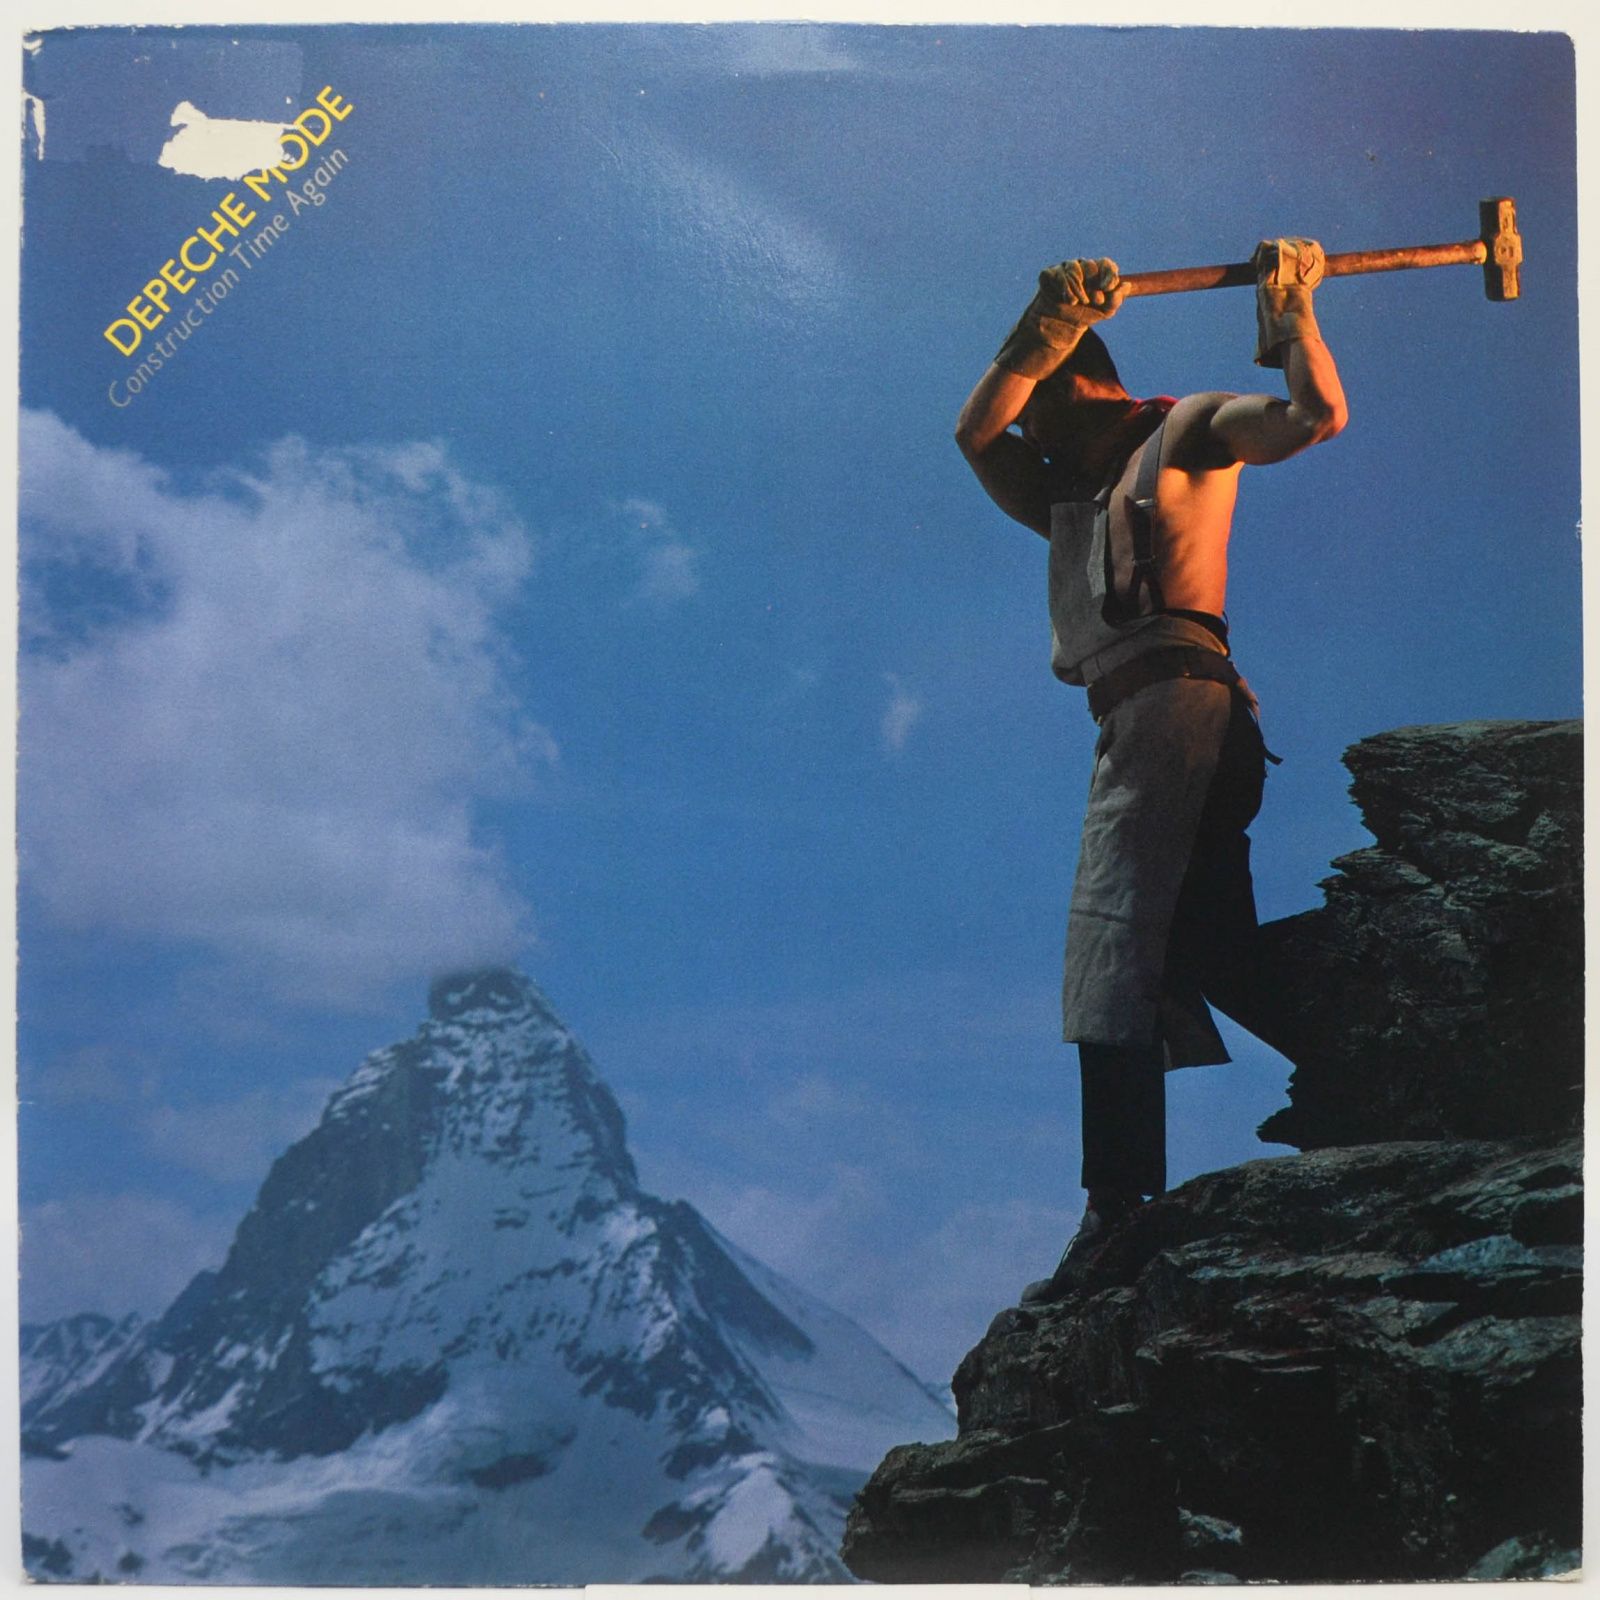 Depeche Mode — Construction Time Again, 1983